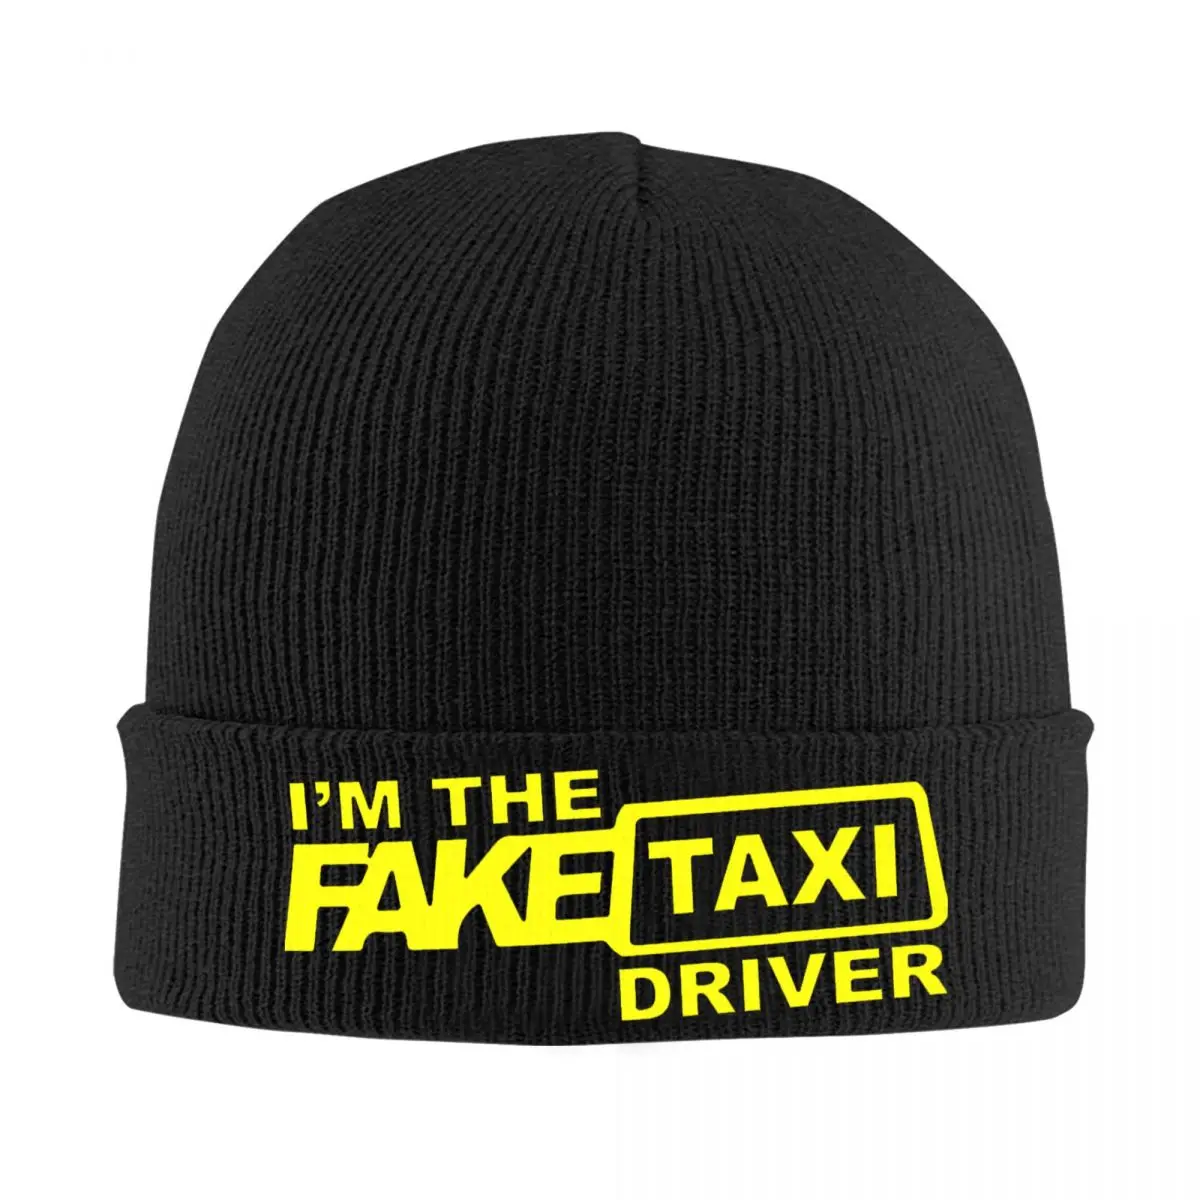 

I'm The Fake Taxi Driver Skullies Beanies Caps Unisex Winter Warm Knit Hat Women Men Hip Hop Adult Bonnet Hats Outdoor Ski Cap